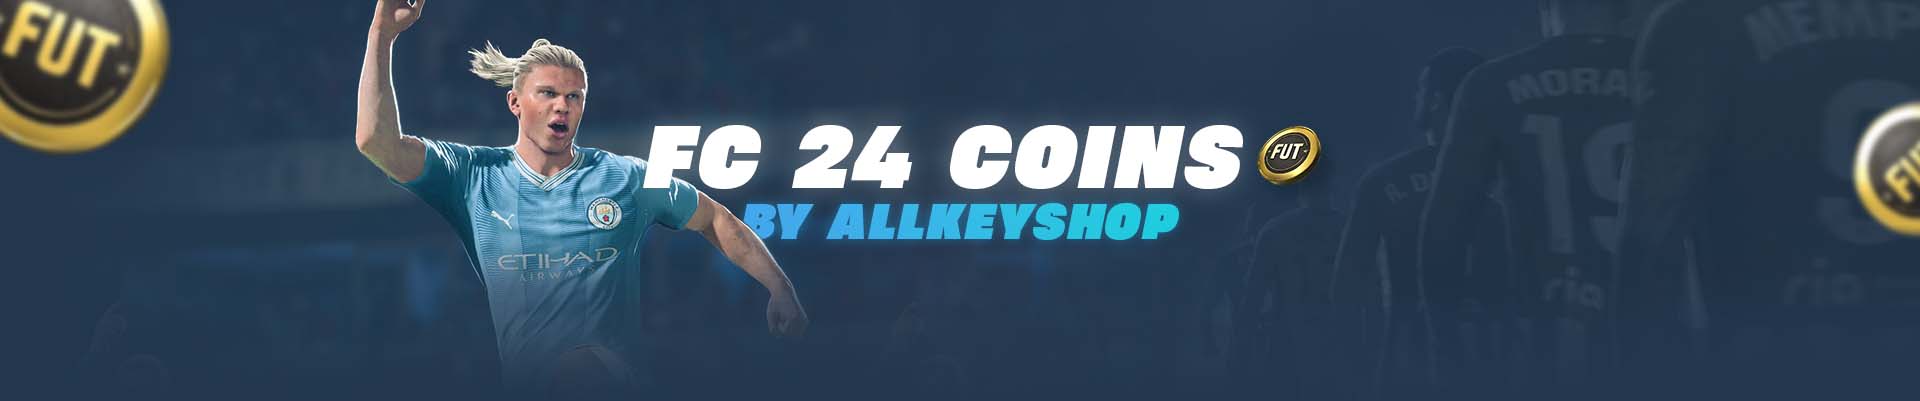 Allkeyshop FC POINTS